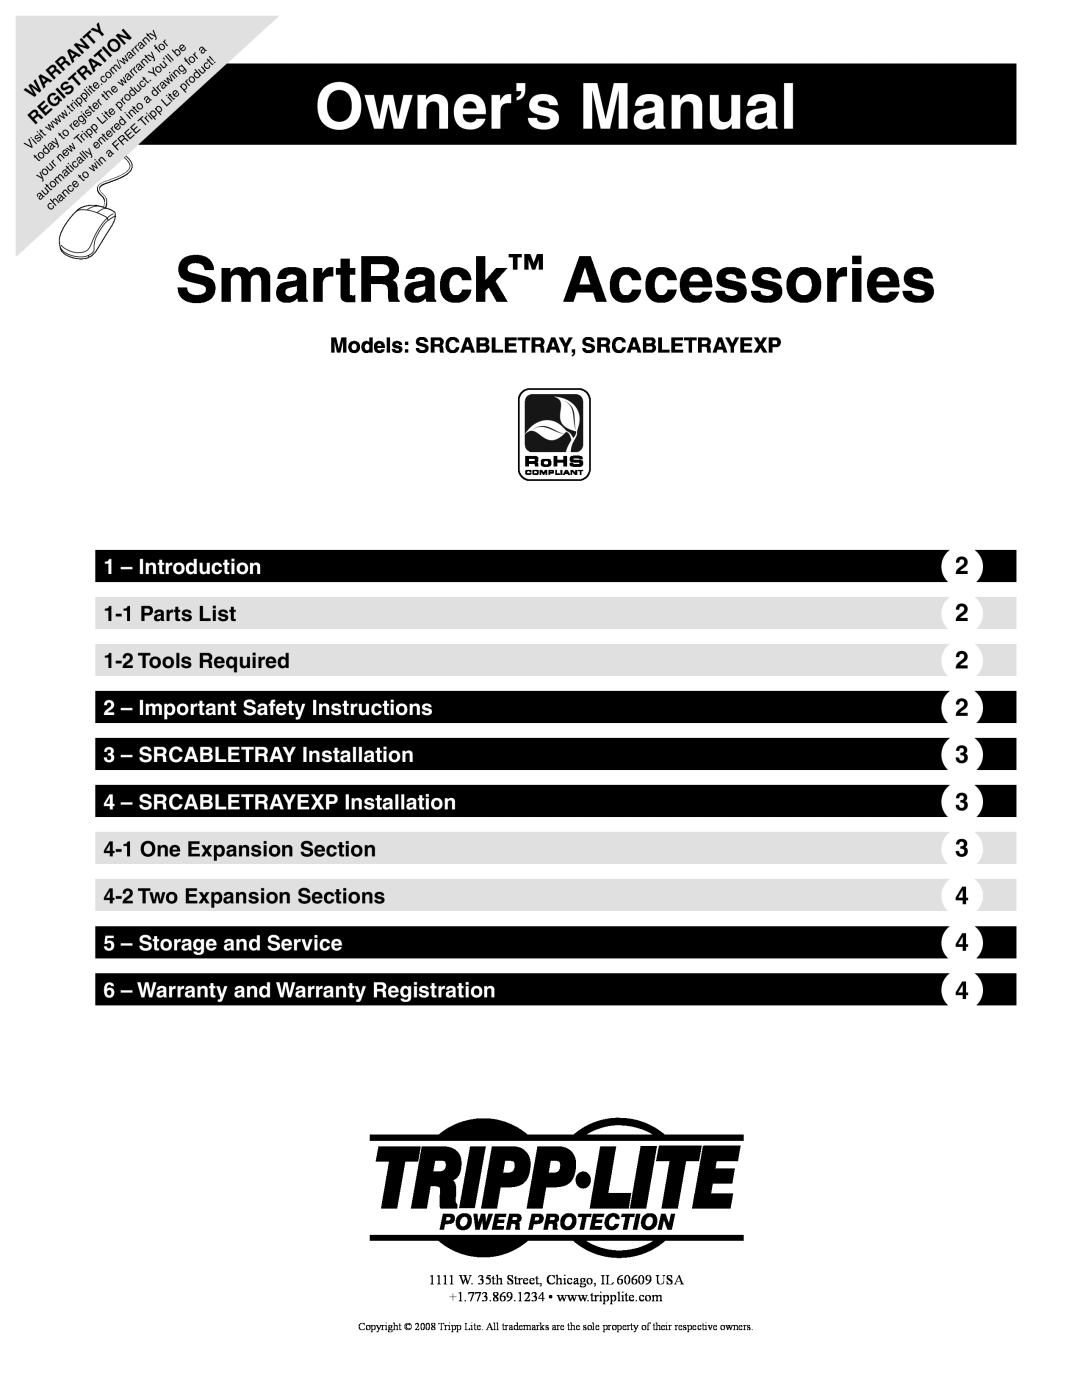 Tripp Lite owner manual Models SRCABLETRAY, SRCABLETRAYEXP, SmartRack Accessories 